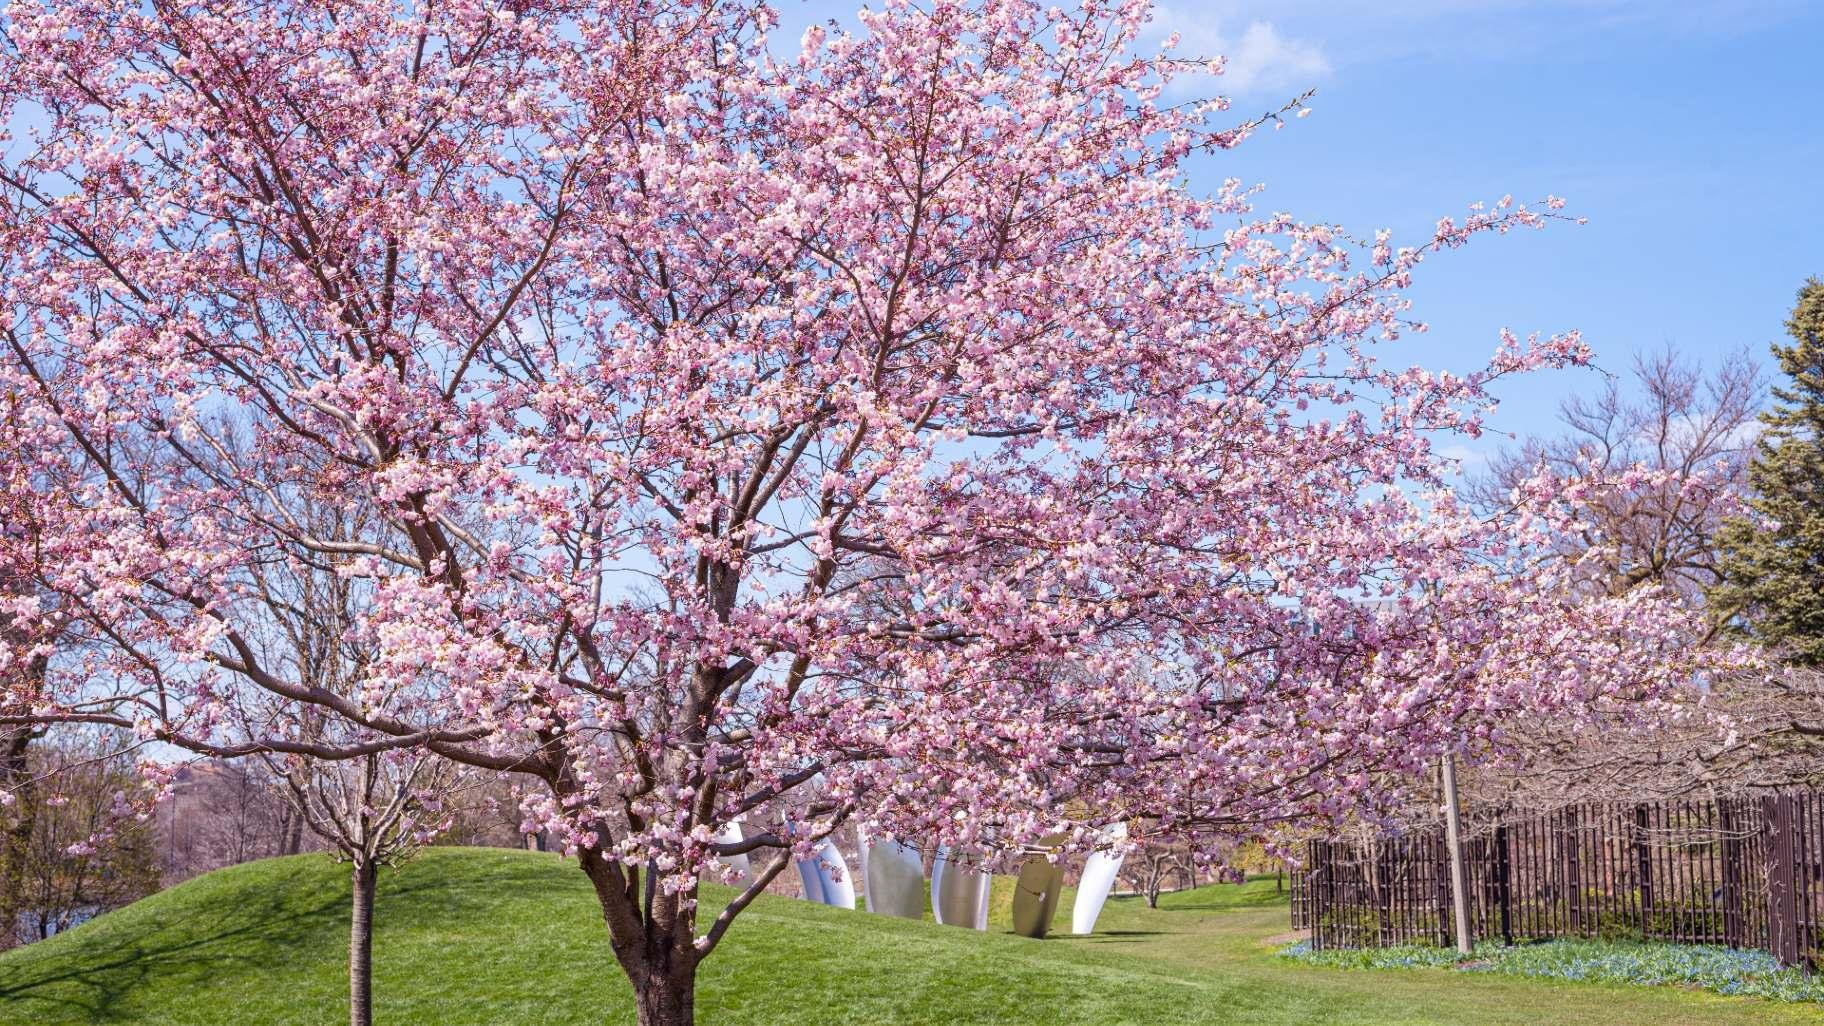 Cherry blossoms at Jackson Park. (Chicago Park District)